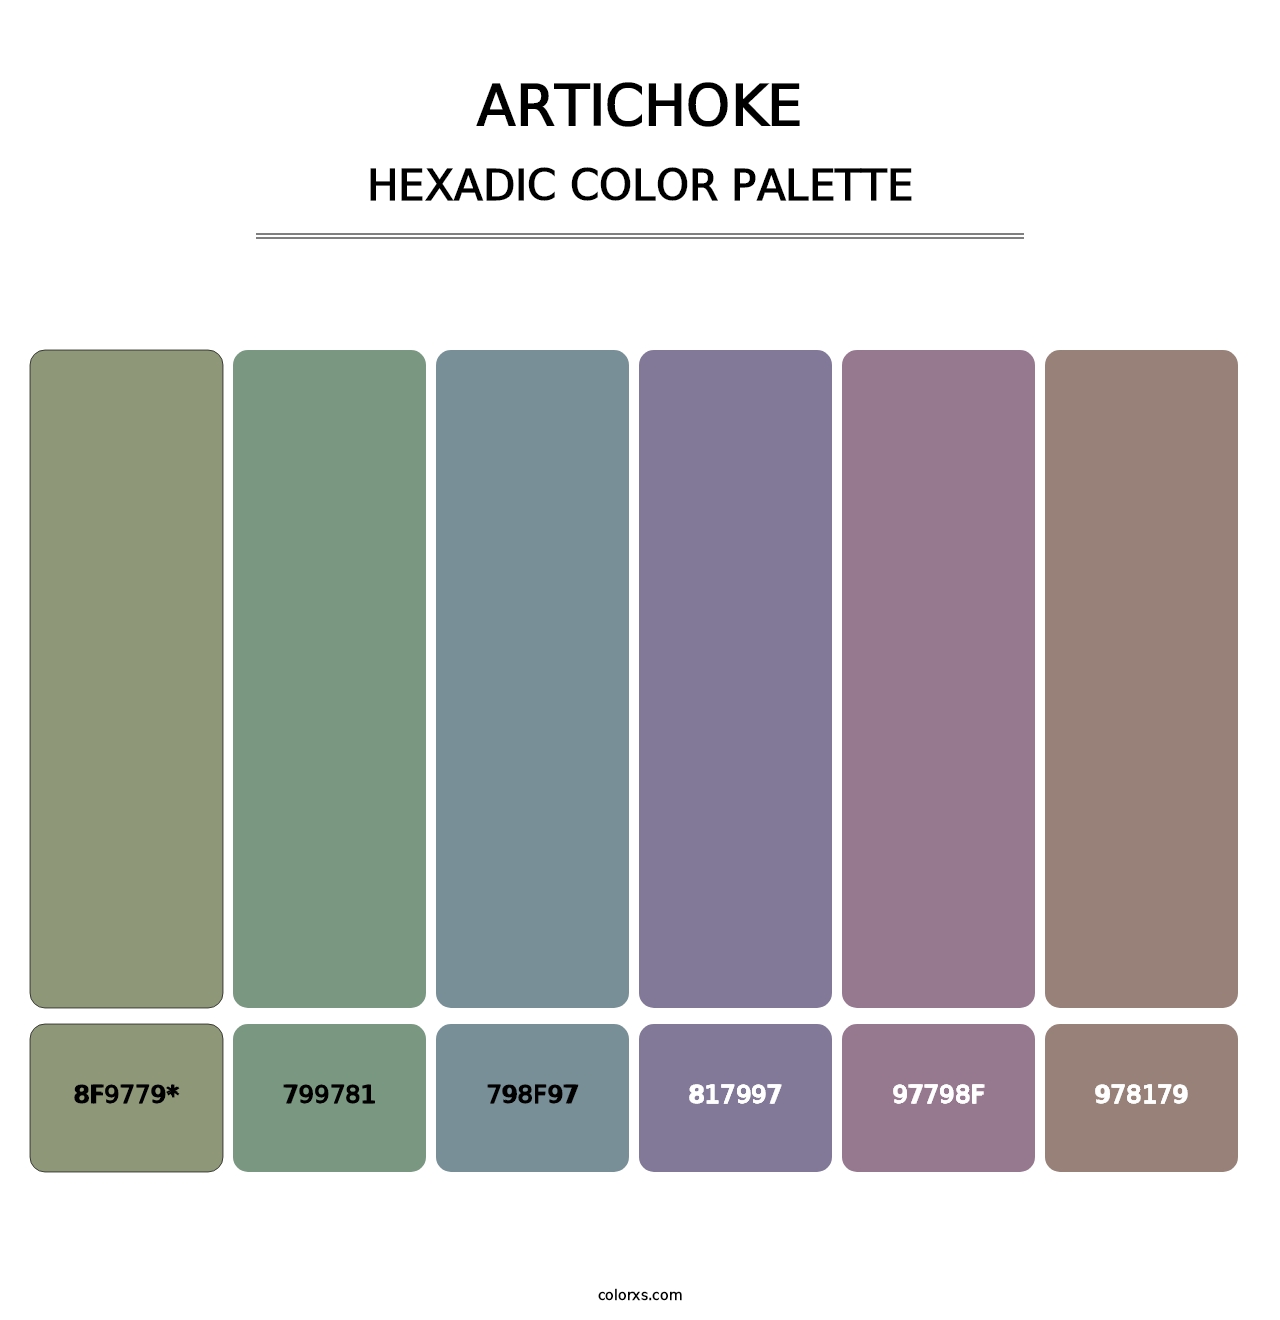 Artichoke - Hexadic Color Palette